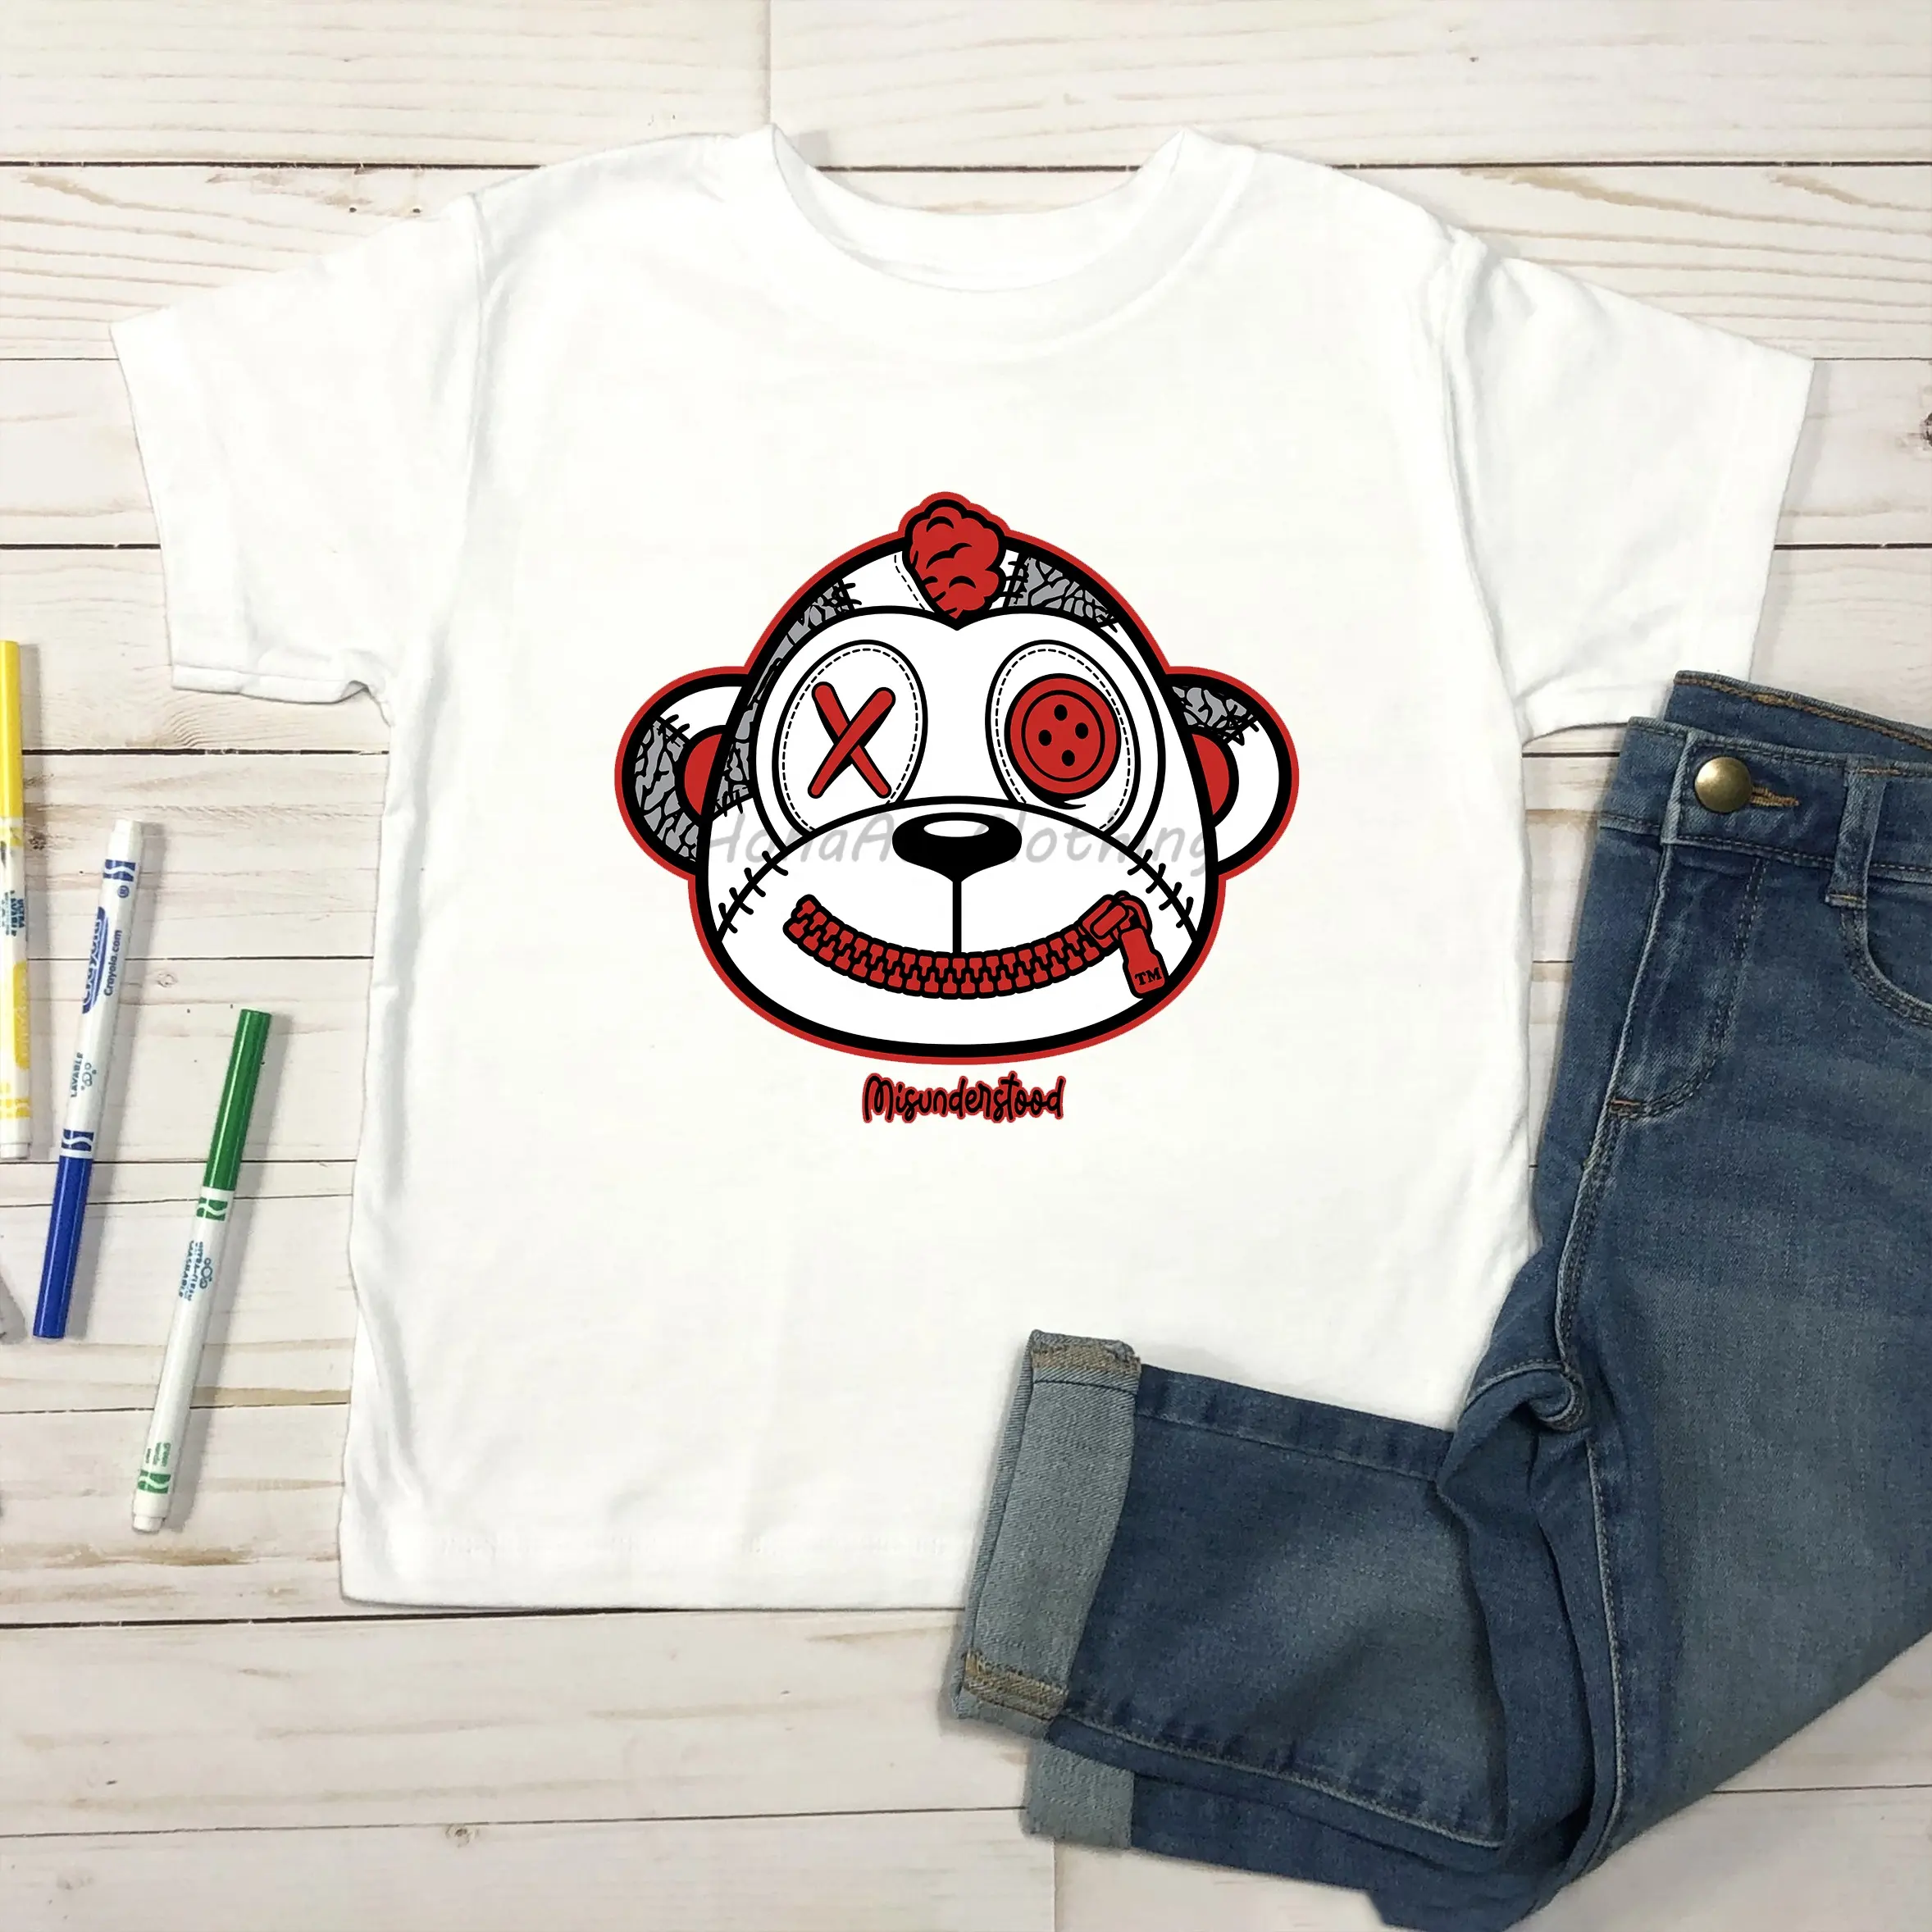 Fire Red 3s Unisex Kids T Shirts Sneaker Match Misunderstood Monkey Shirts 100% Cotton High Quality Graphics T-shirt For Kids